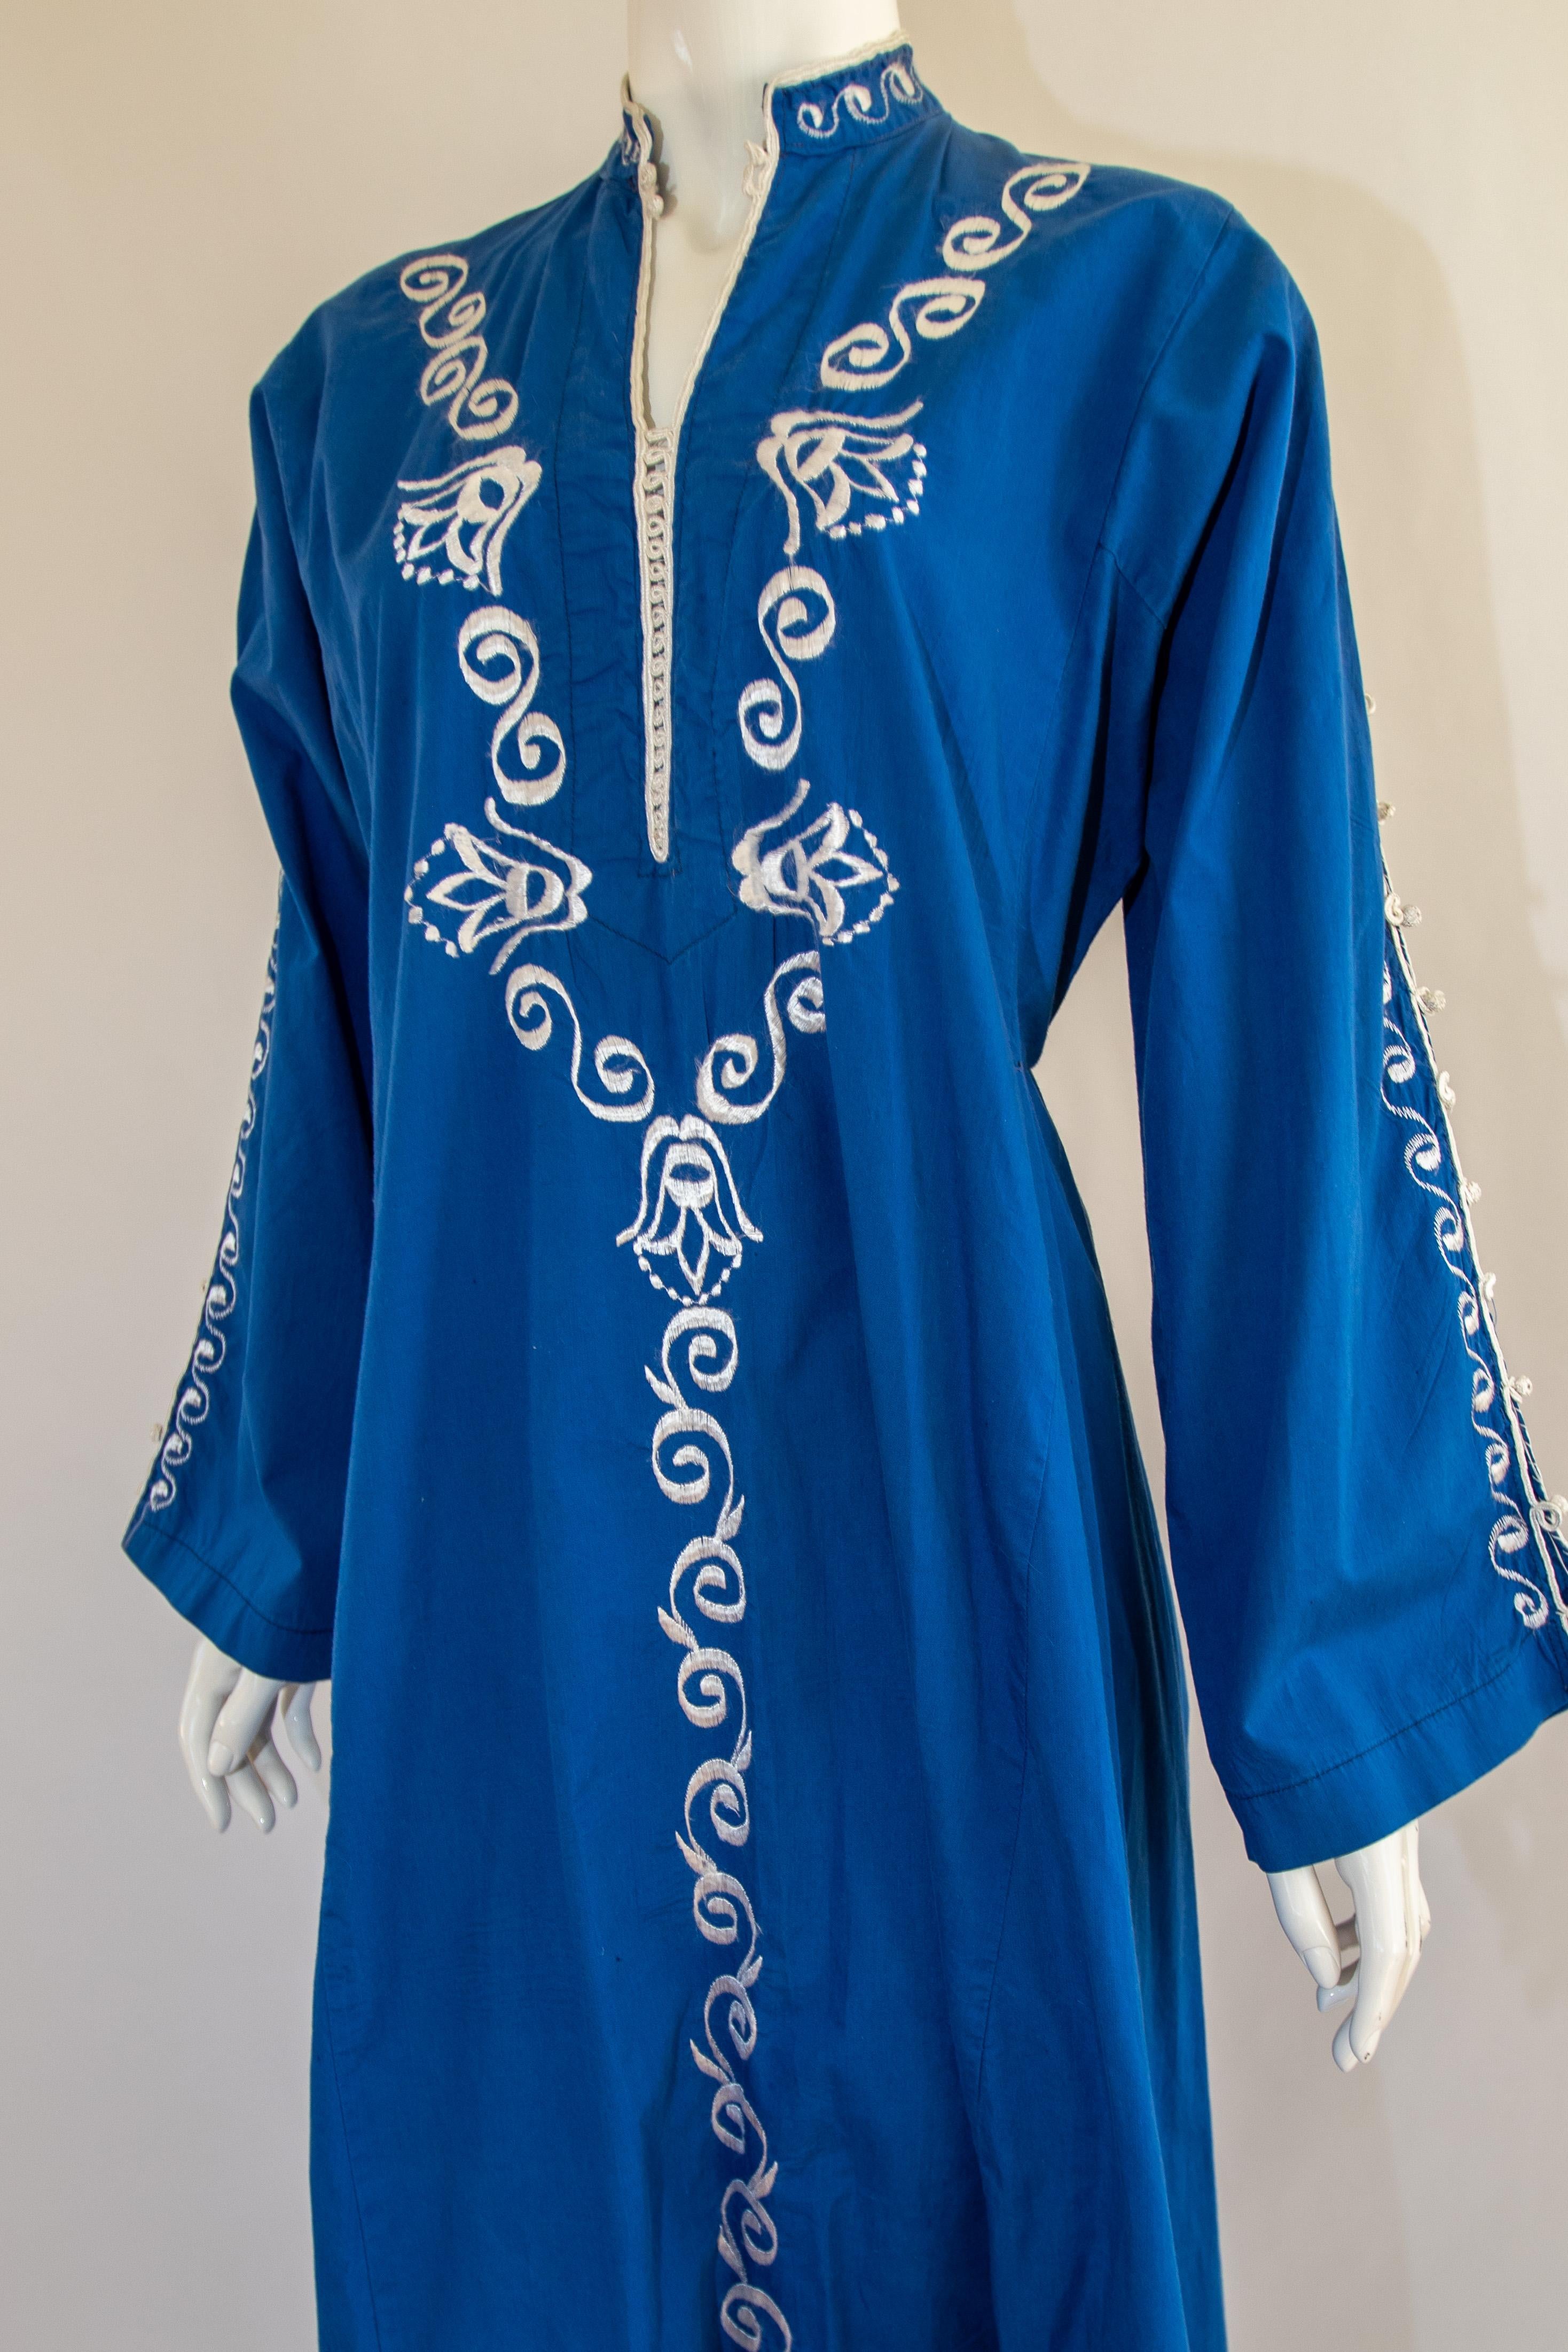 blue moroccan dress